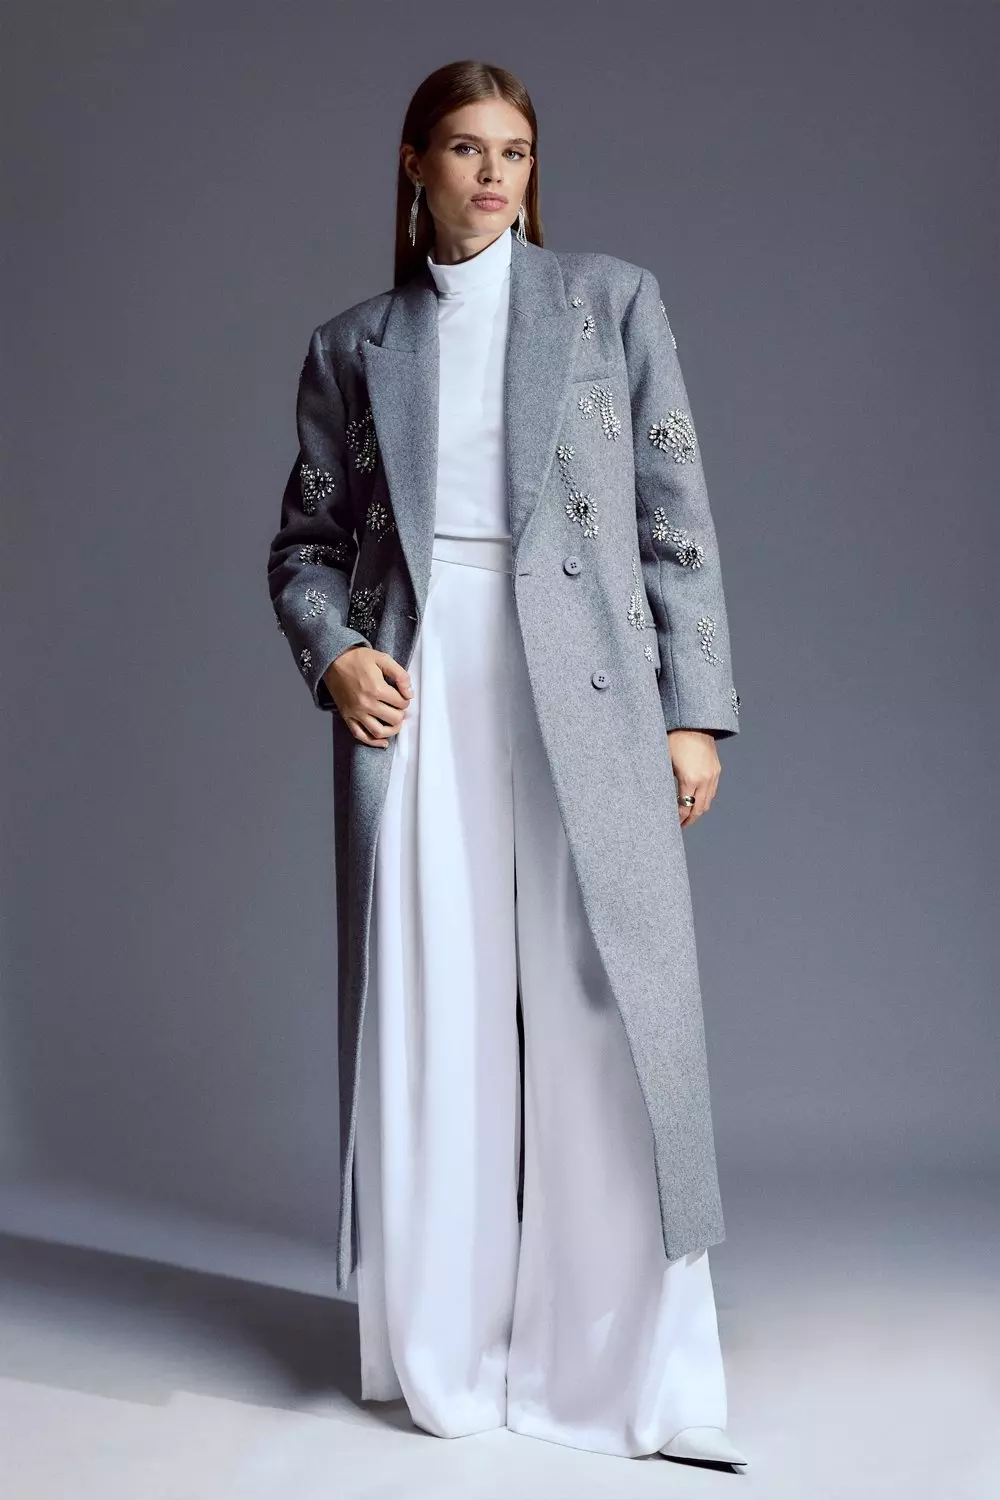 Tall Maxi Coats, Women's Long Coats